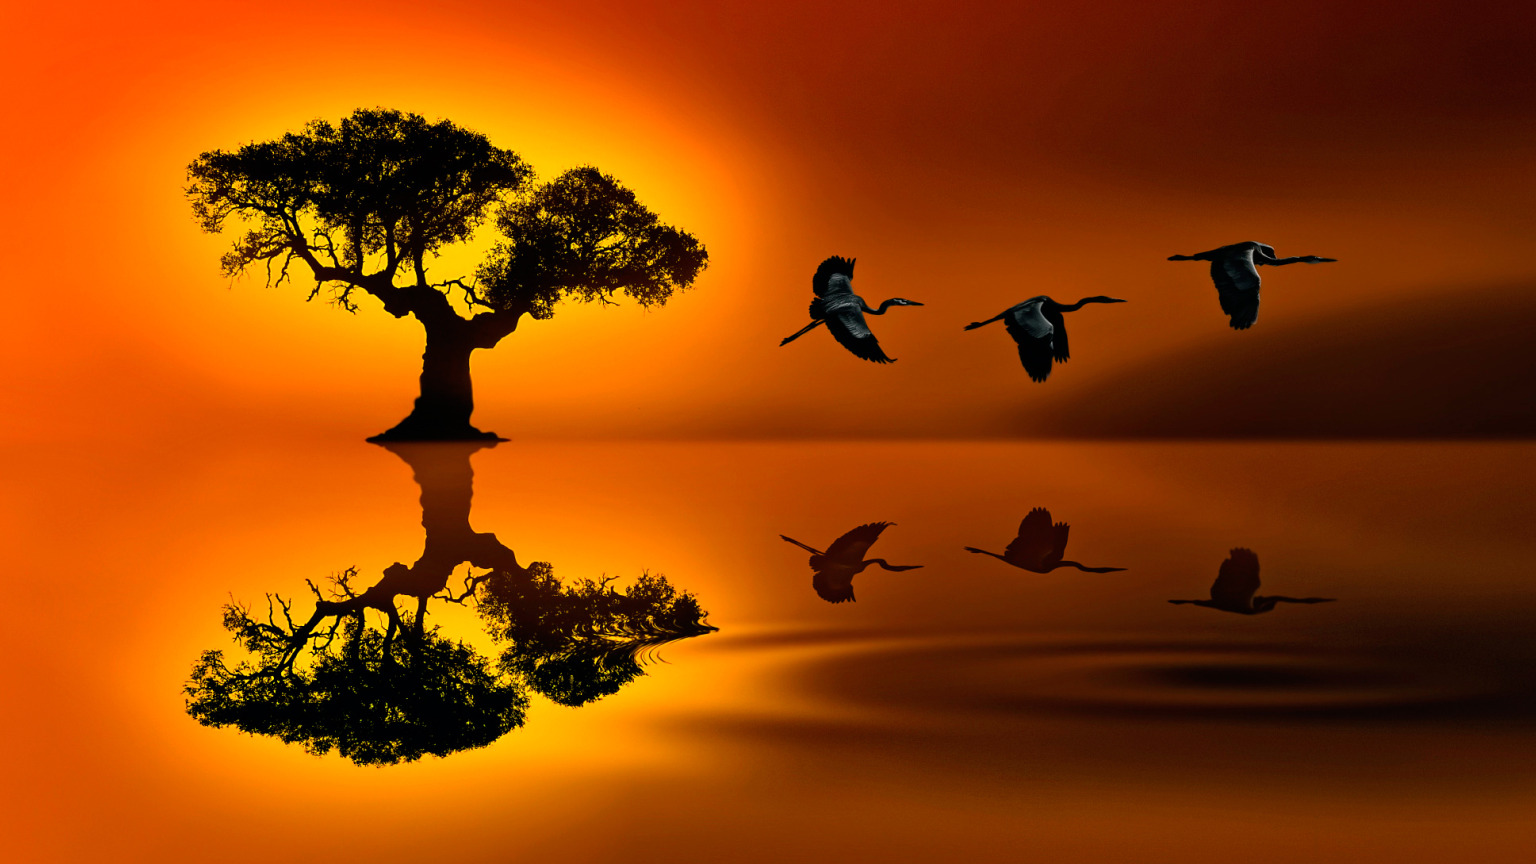 birds, reflection, tree, SUNSET JOURNEY